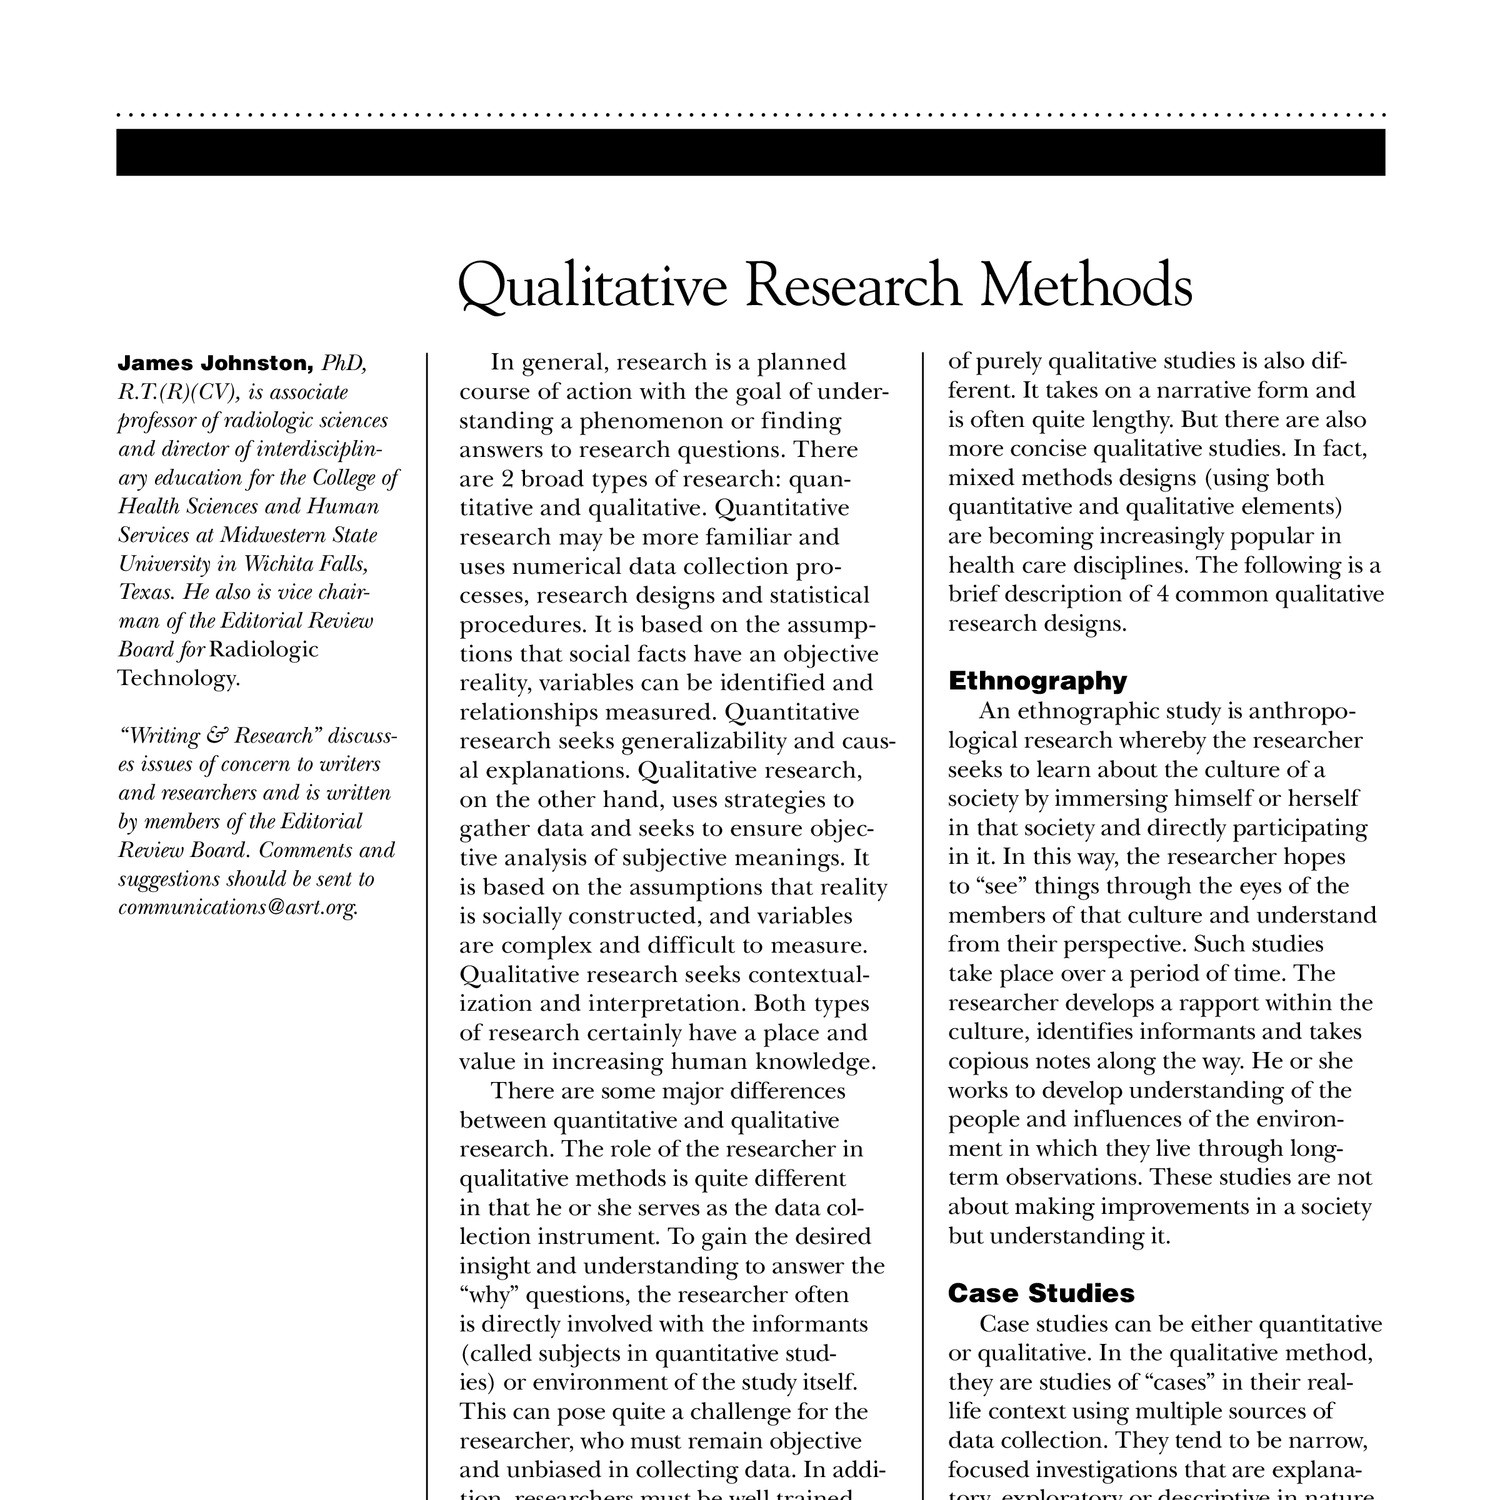 sage encyclopedia of qualitative research methods pdf